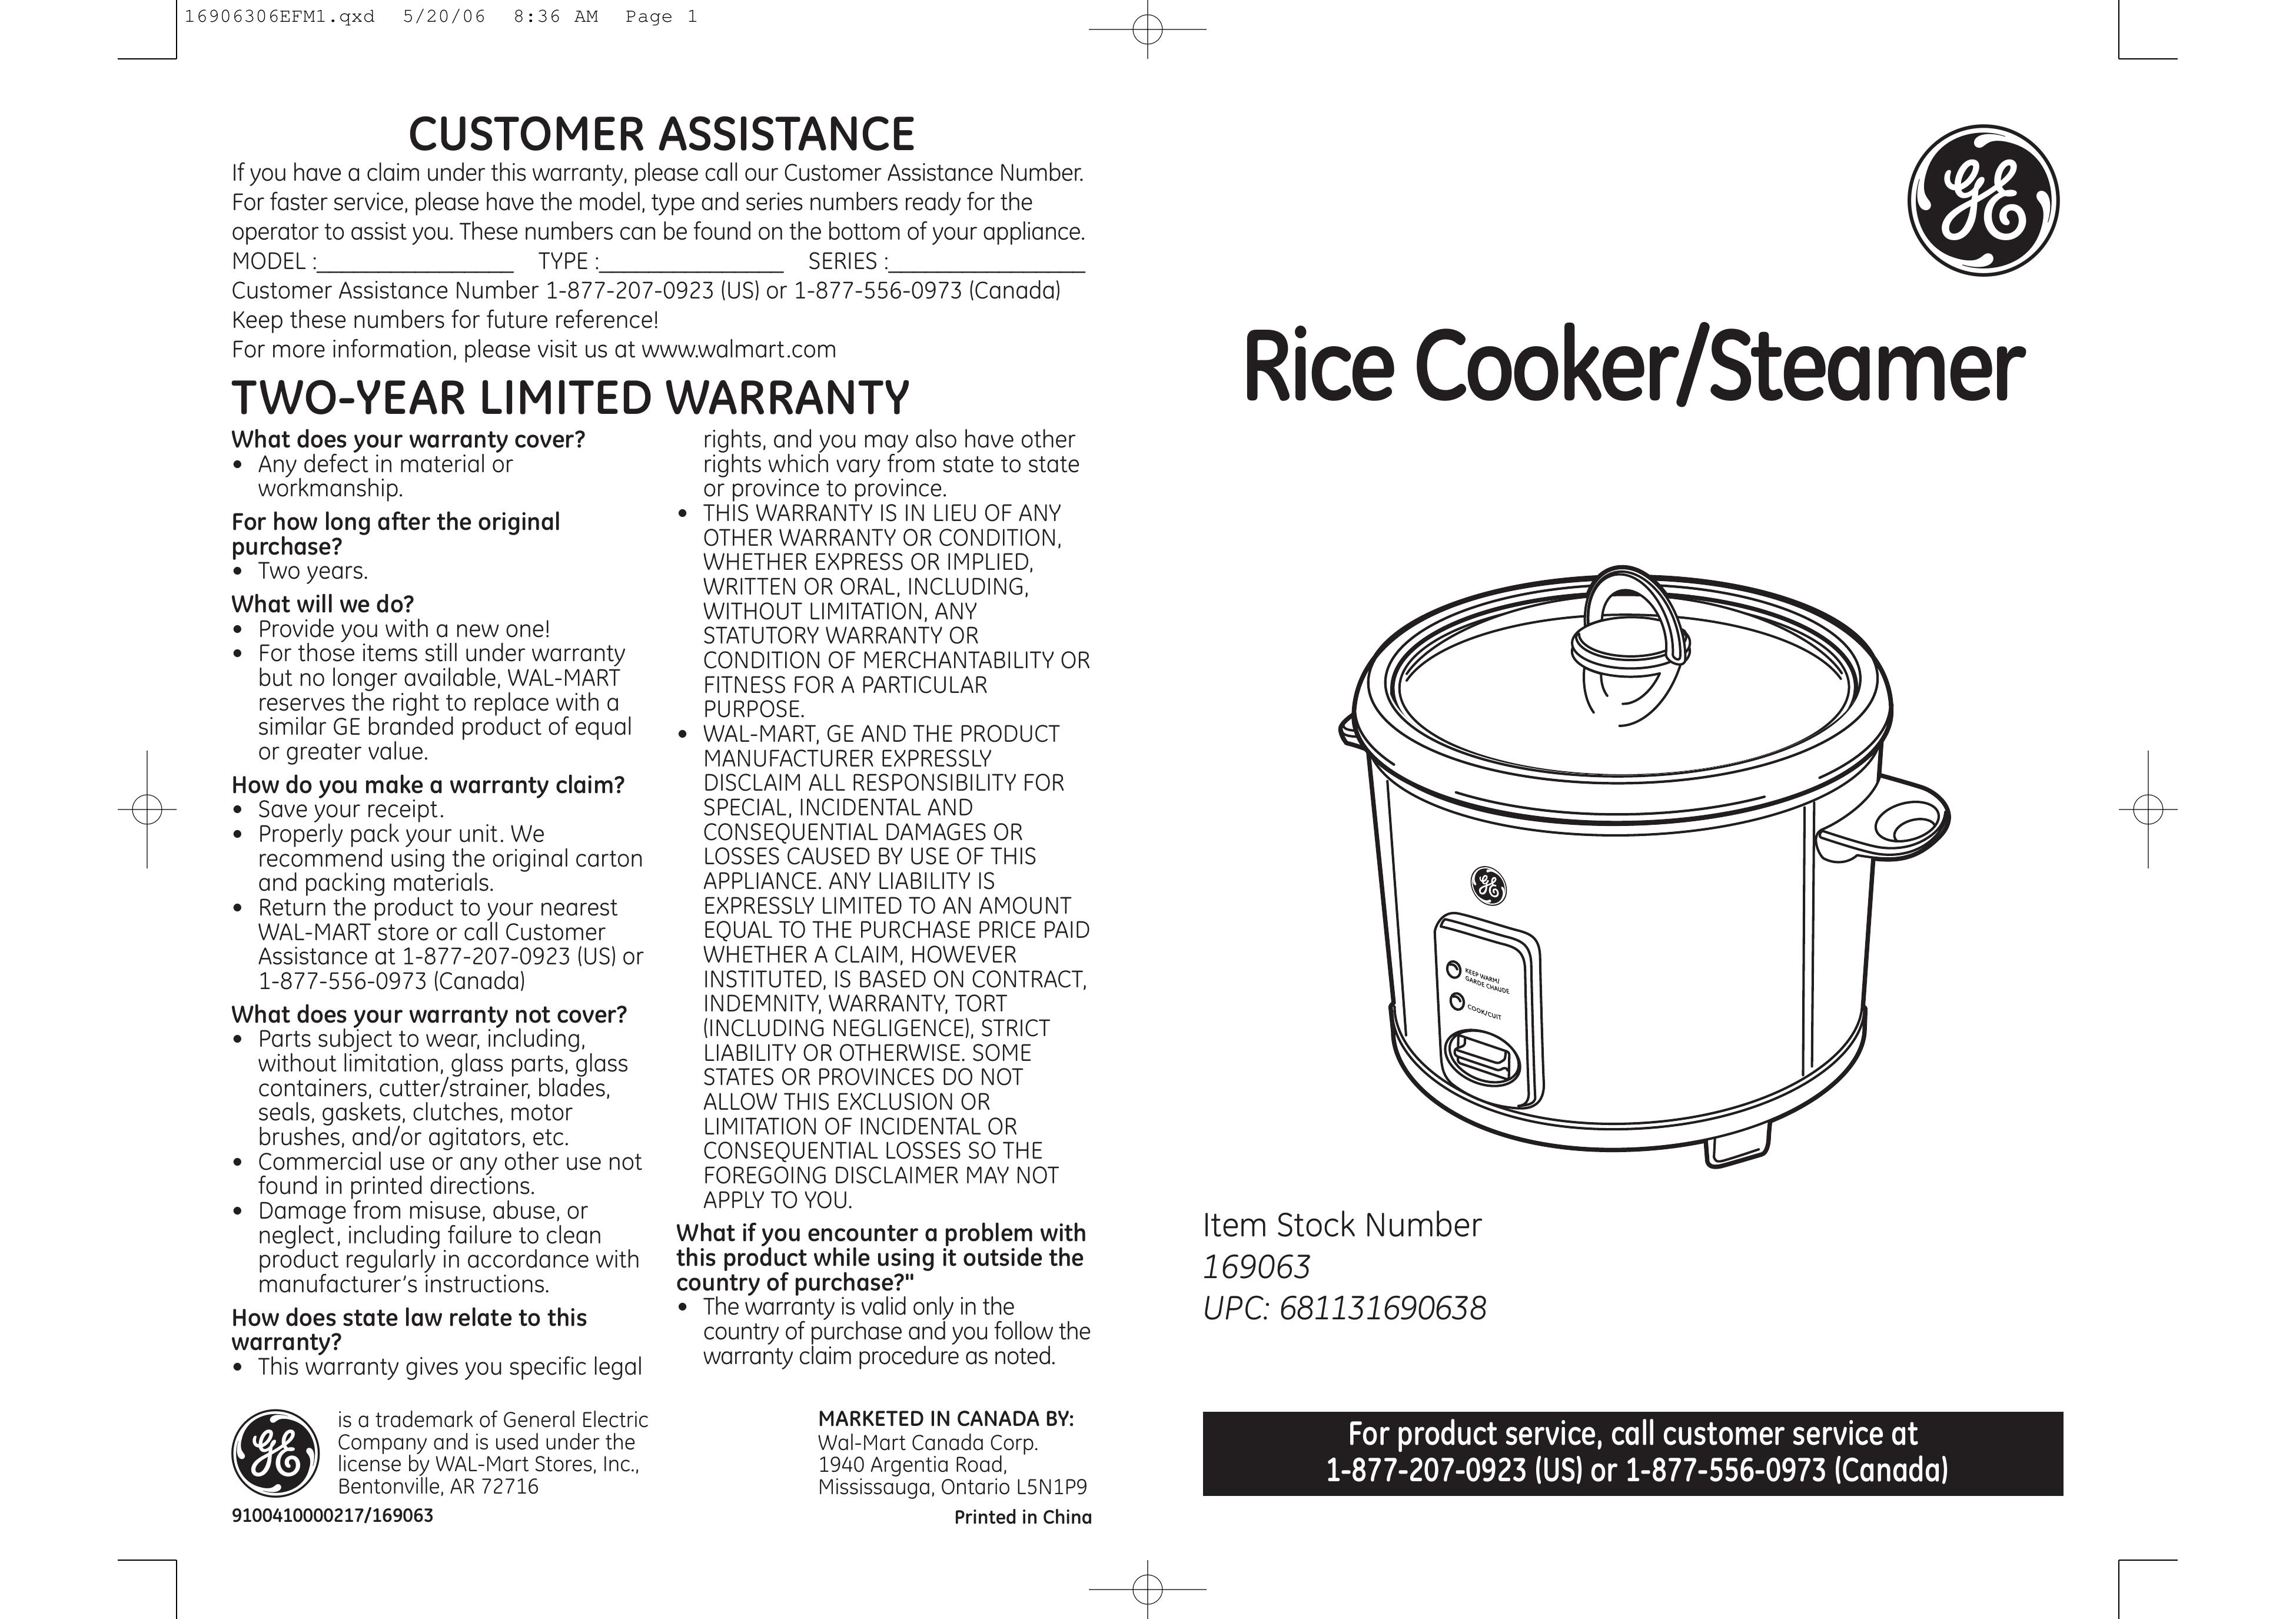 GE 681131690638 Rice Cooker User Manual